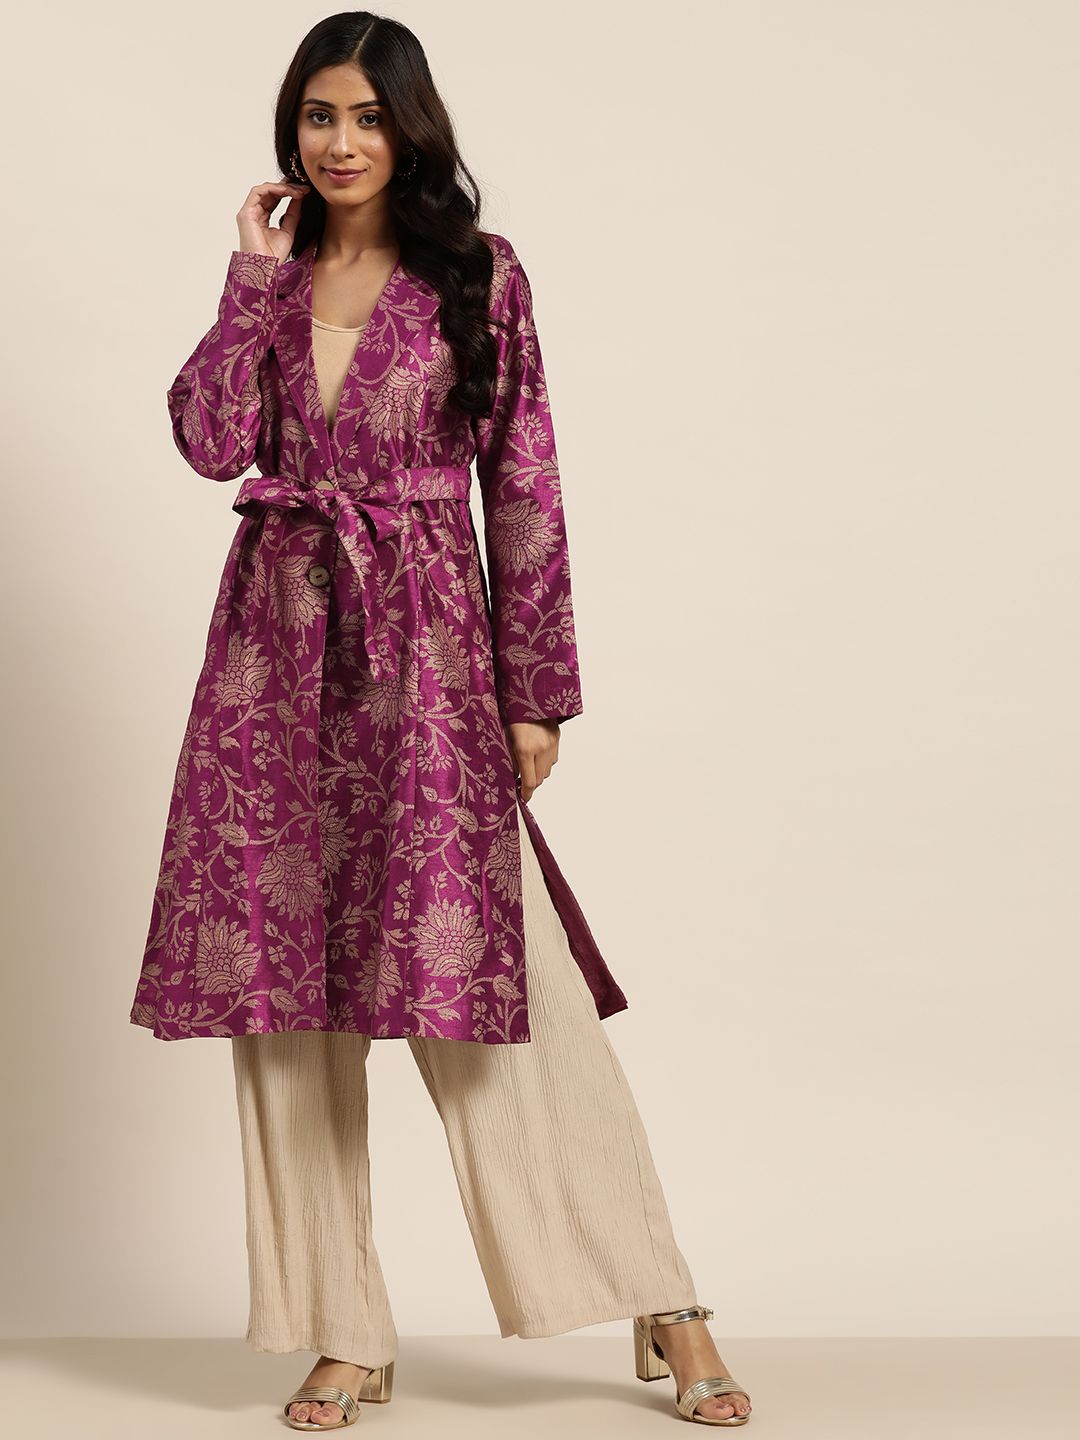 Shae by SASSAFRAS Women Purple & Gold Jacquard Floral Lightweight Self-Belt Long Jacket Price in India